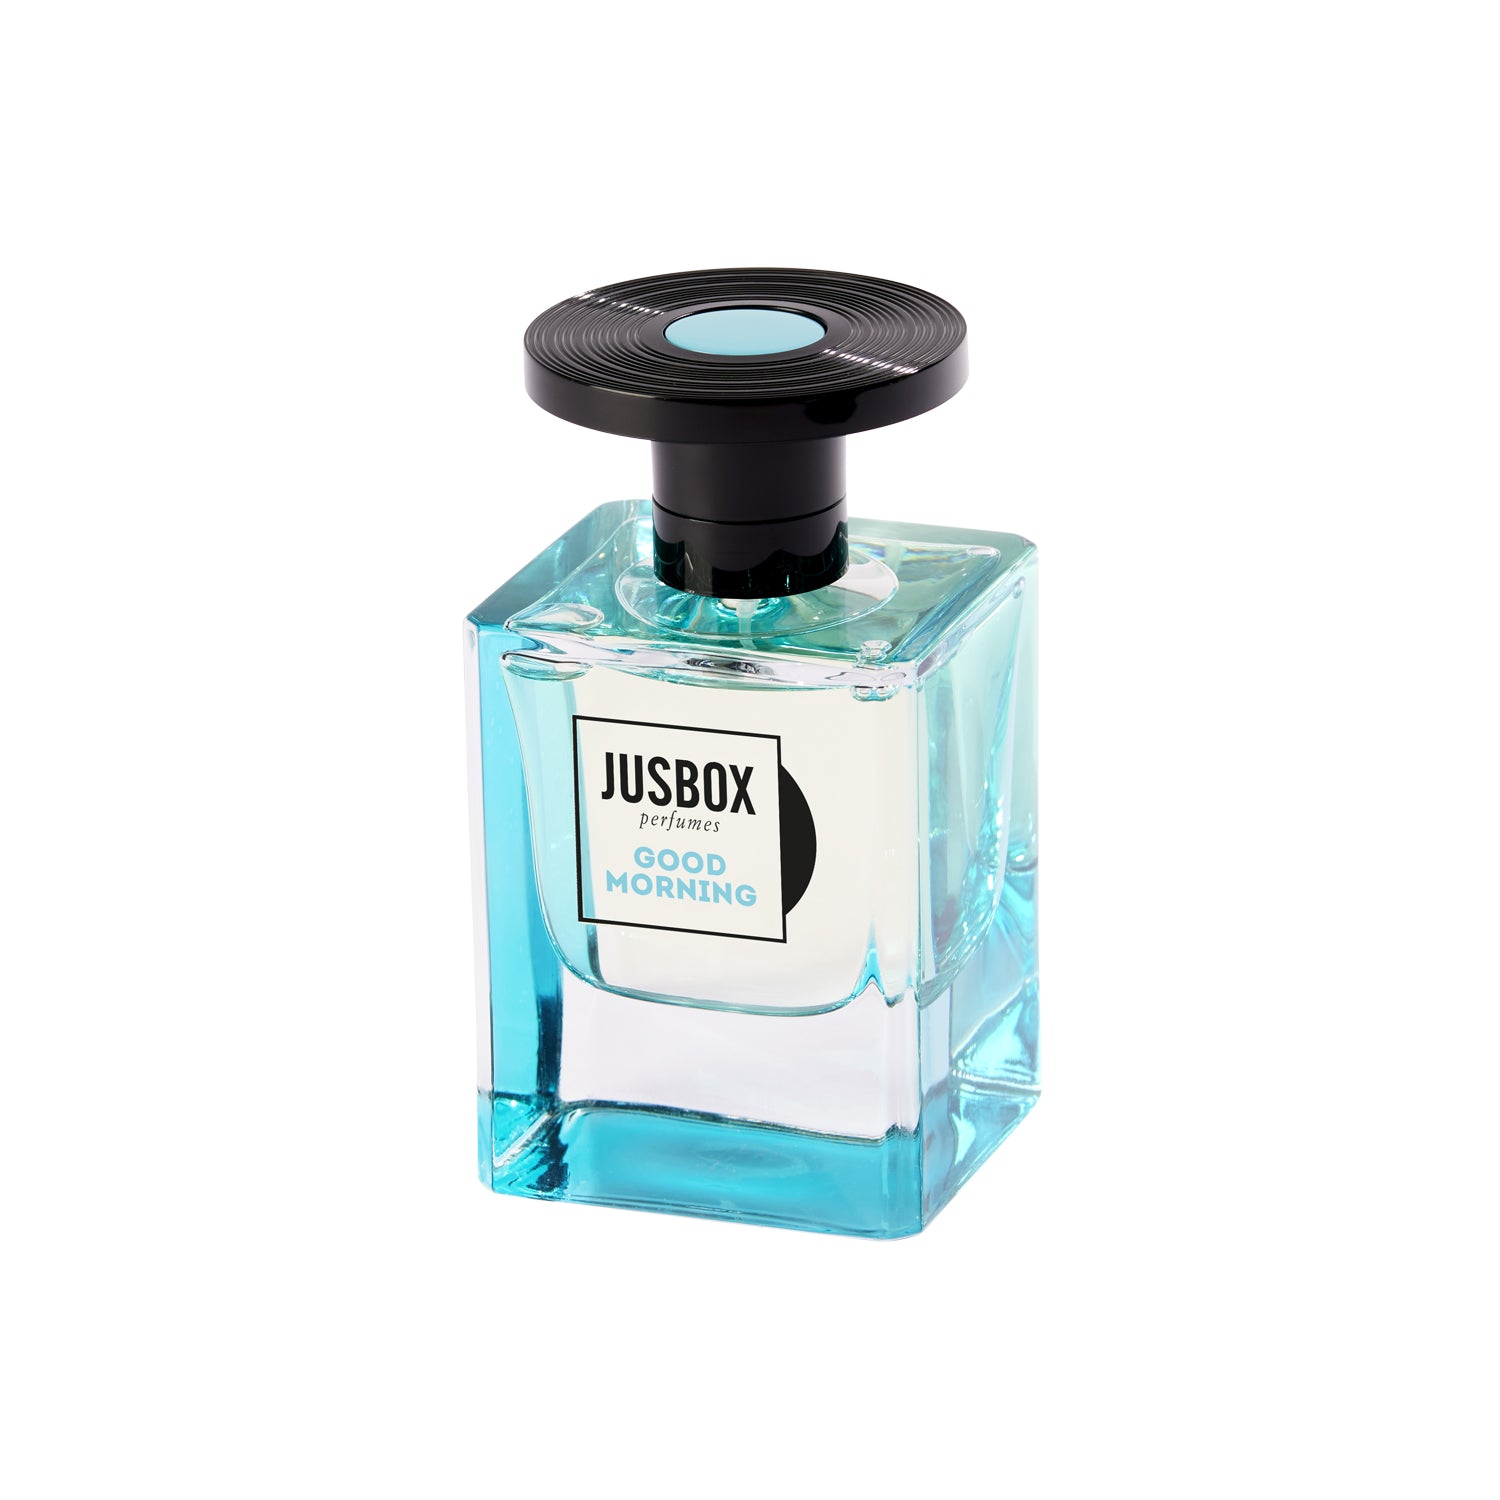 Stunning Emotion-Inspired Fragrances : celesto